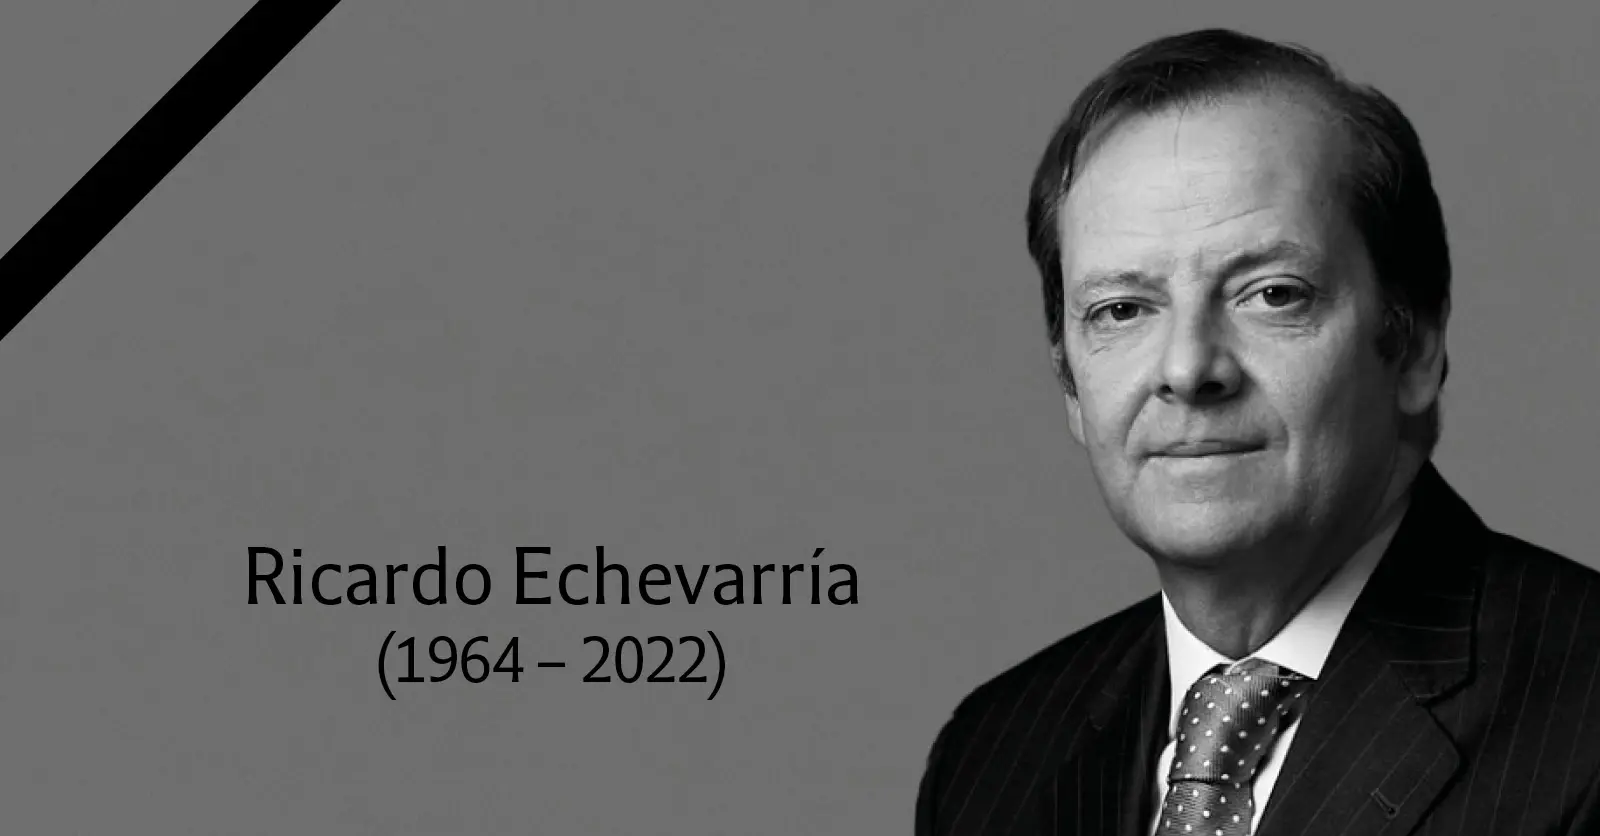 Cuatrecasas partner Ricardo Echevarría passes away